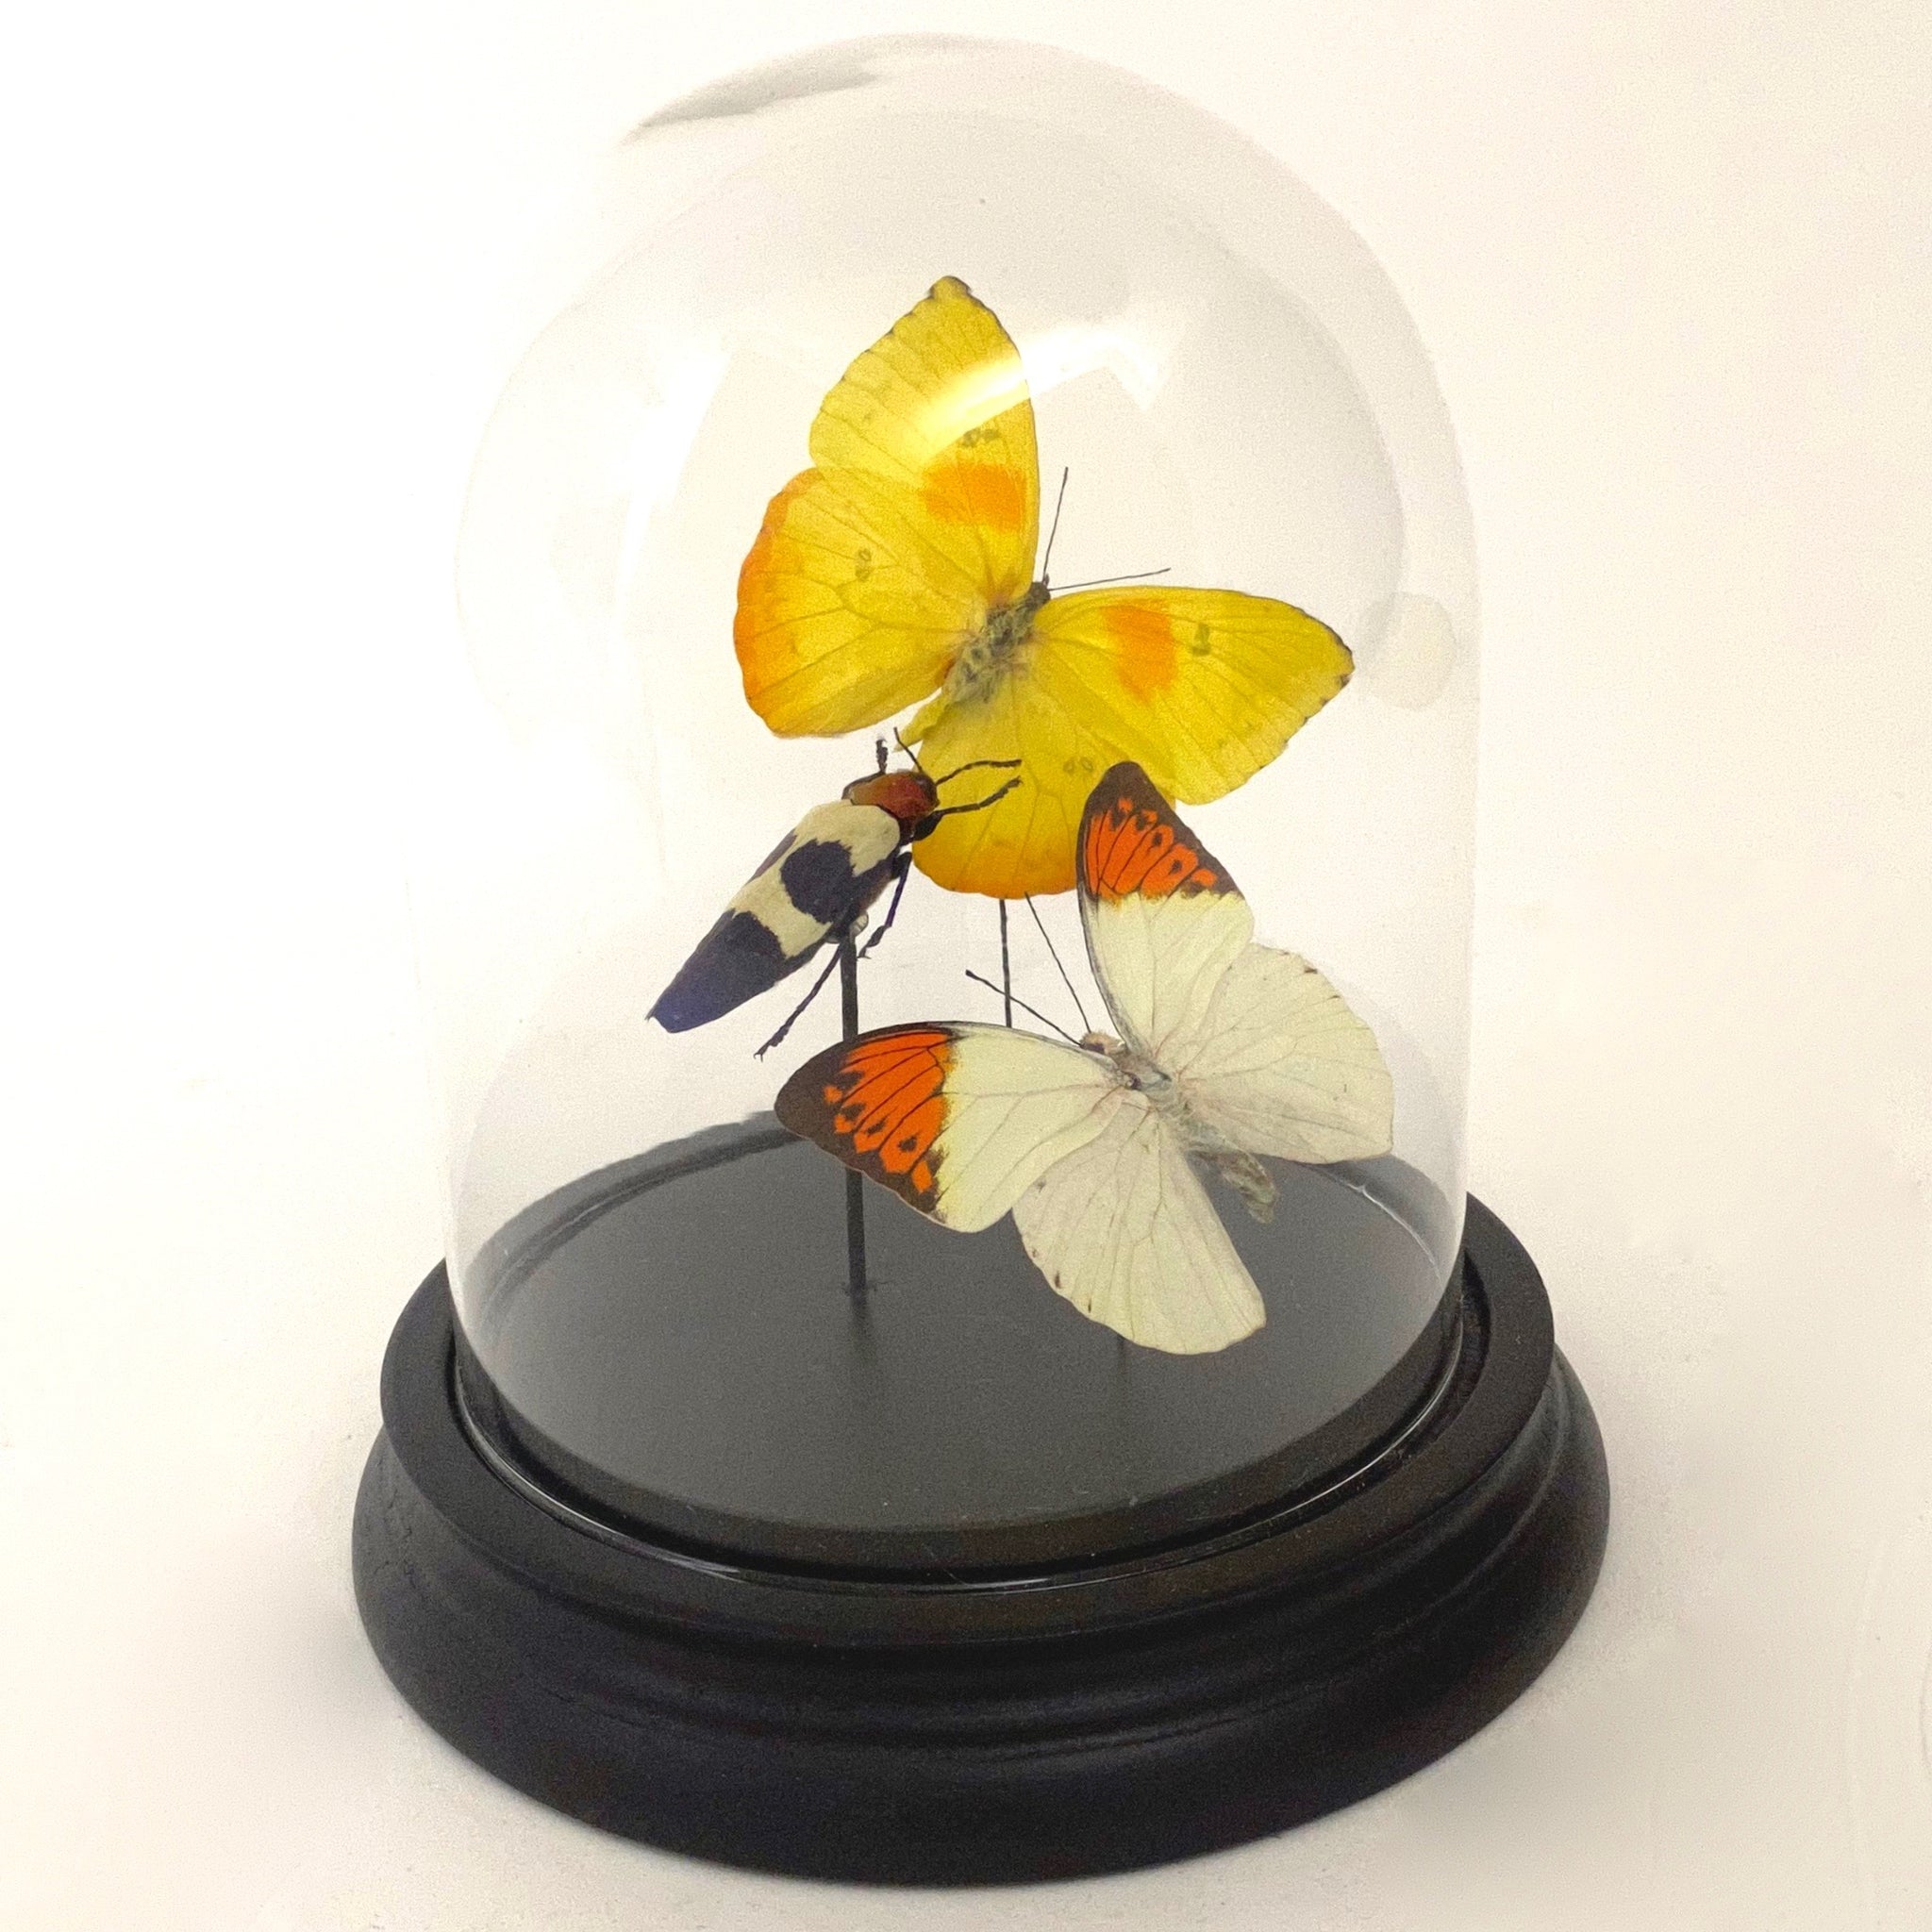 Display of butterflies and jewel beetle.